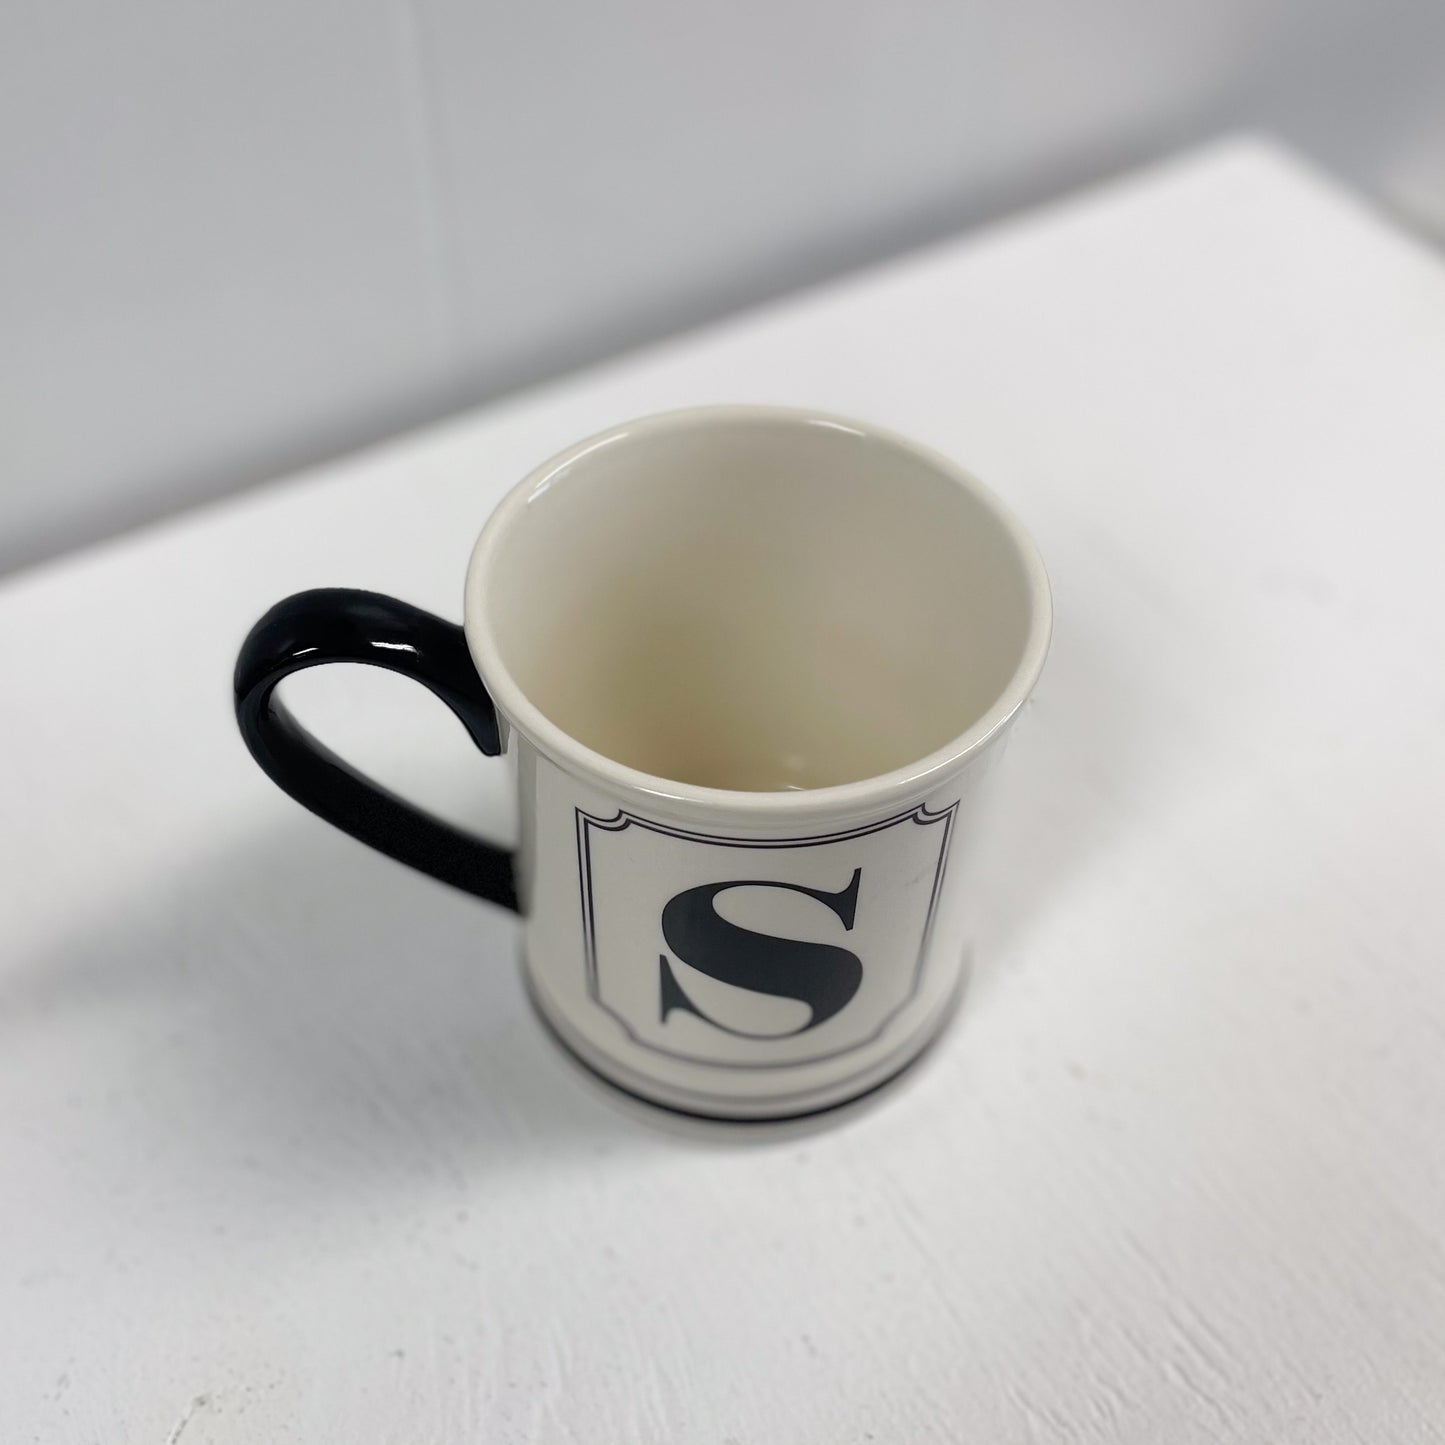 Monogram S Mug by Formation Brands